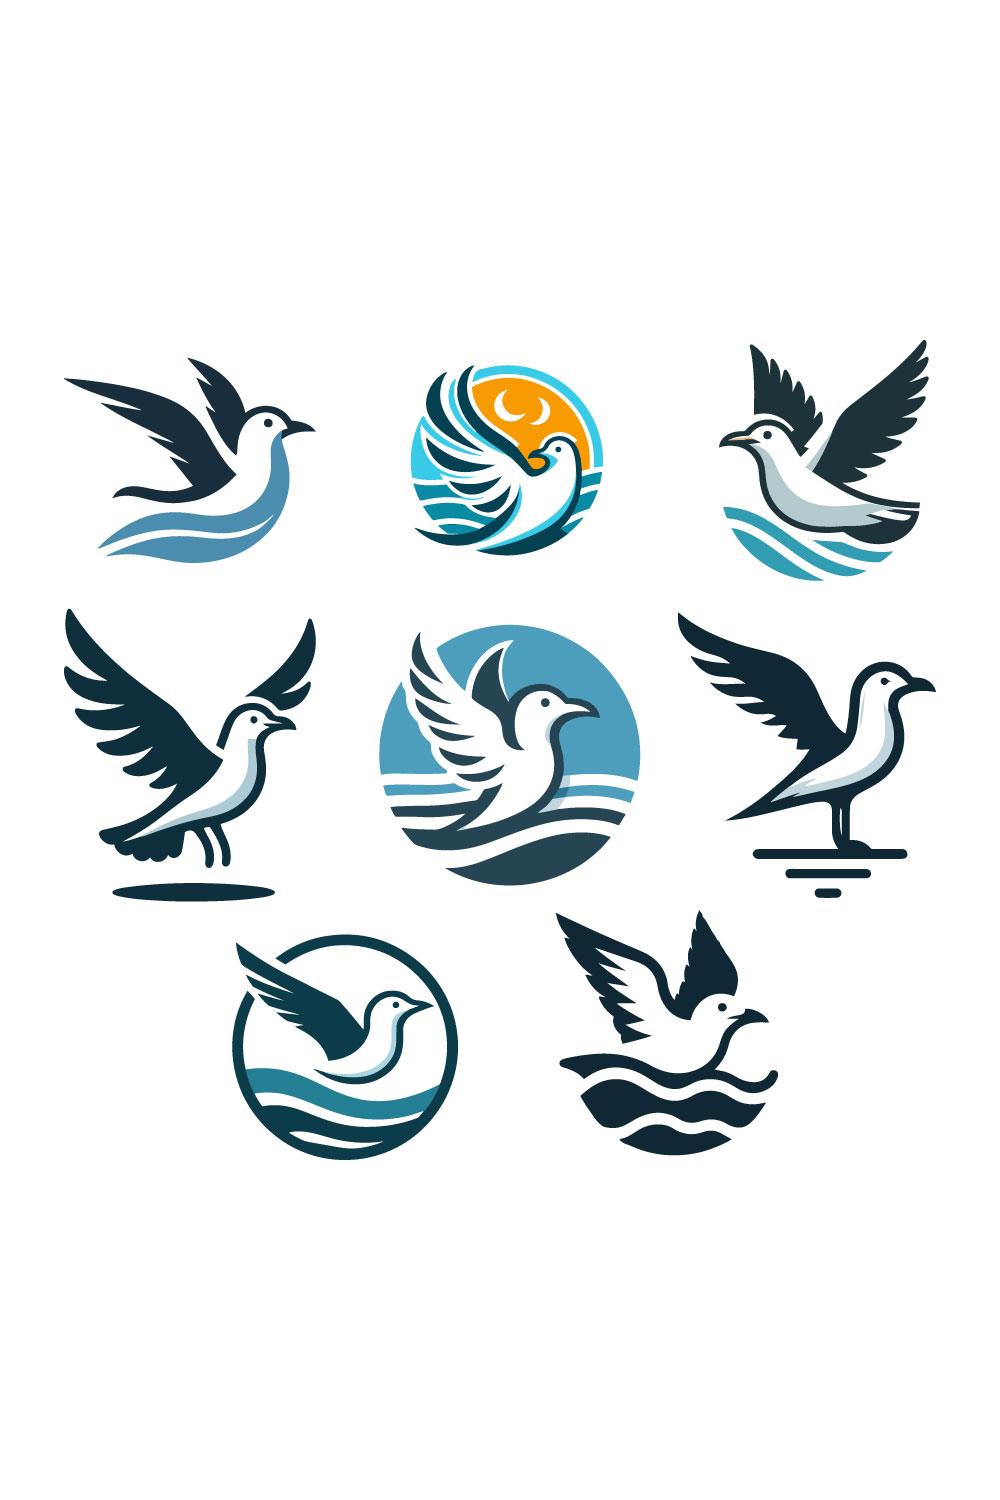 8 Seagull logos Vector Illustration pinterest preview image.